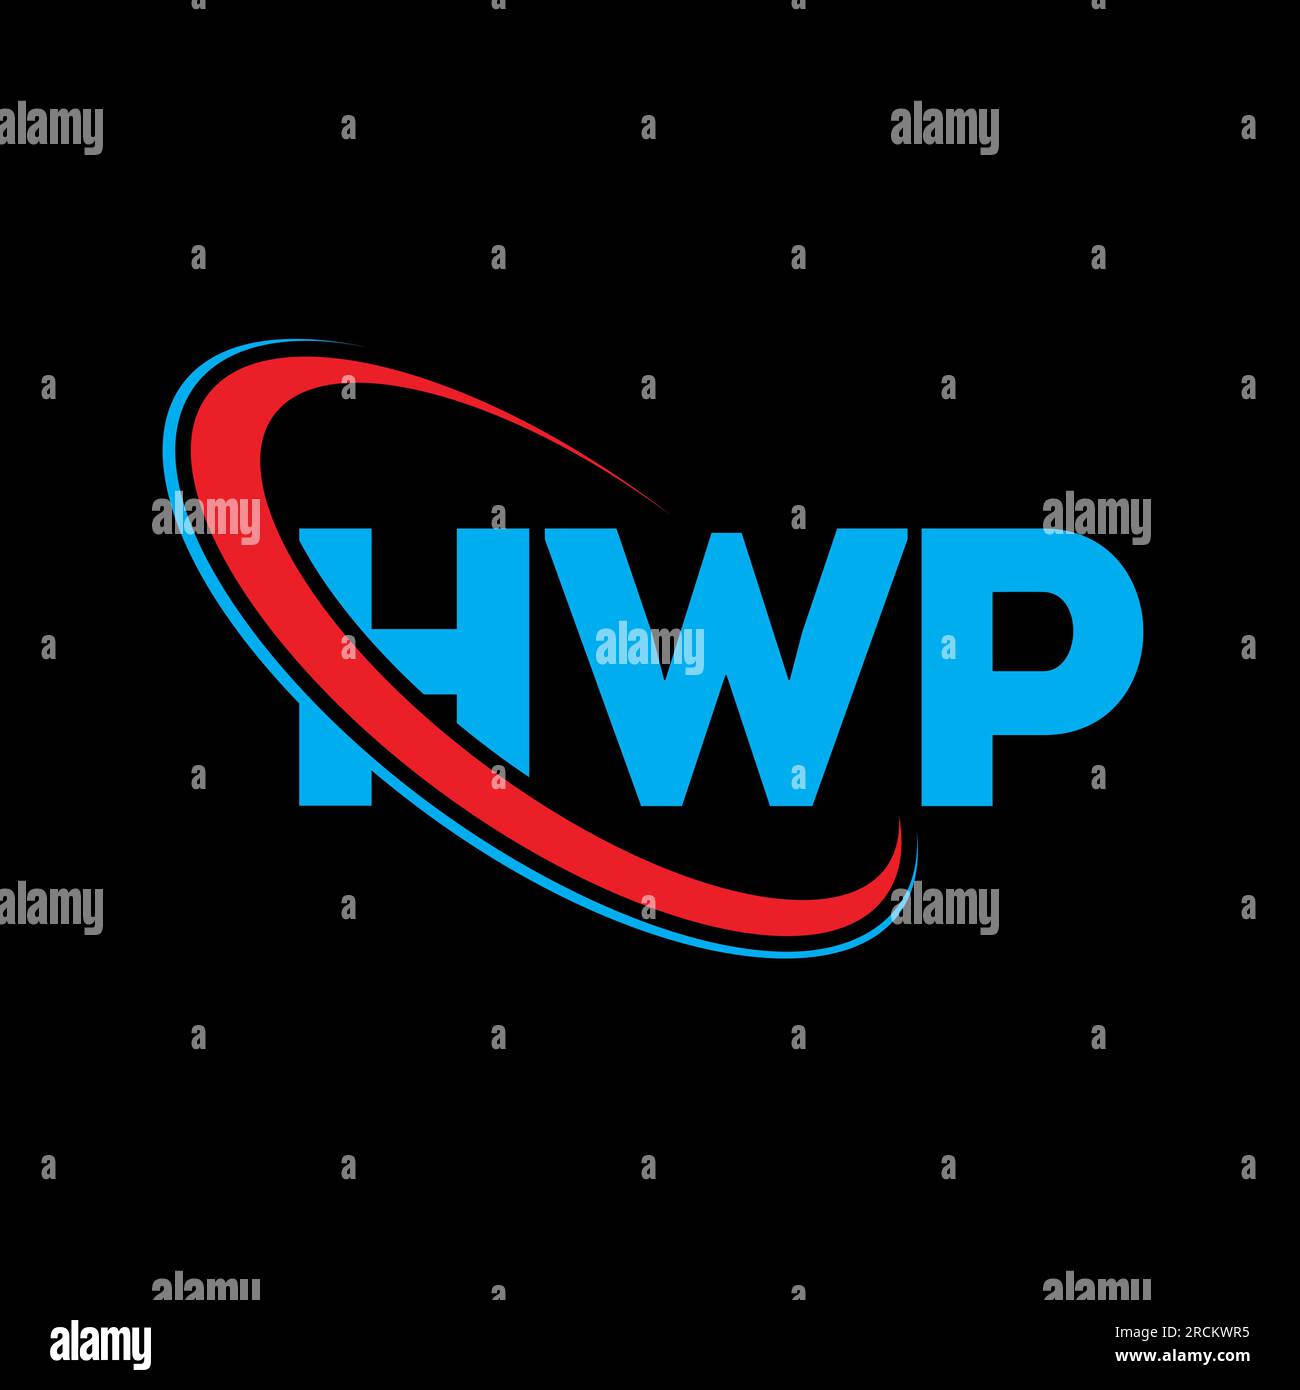 HWP logo. HWP letter. HWP letter logo design. Initials HWP logo linked with circle and uppercase monogram logo. HWP typography for technology, busines Stock Vector